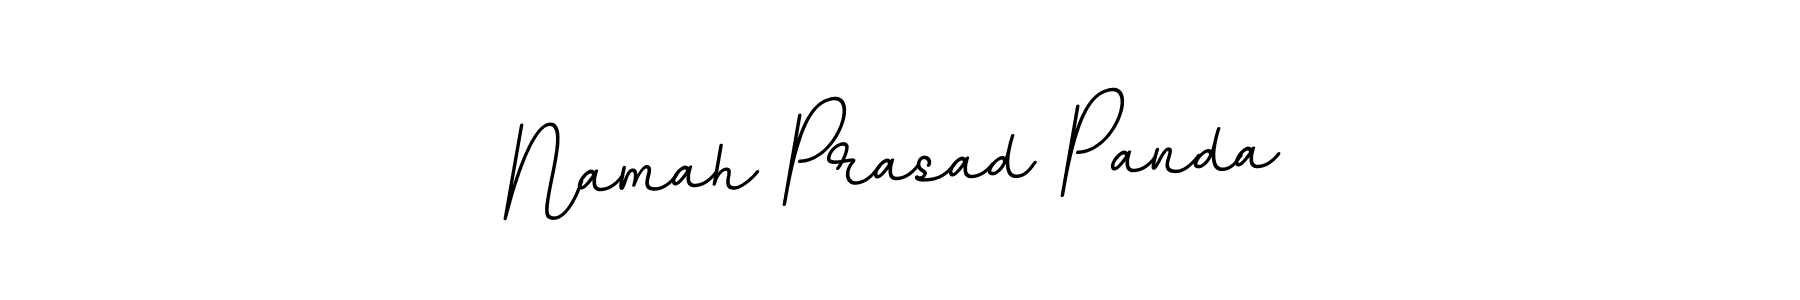 How to Draw Namah Prasad Panda signature style? BallpointsItalic-DORy9 is a latest design signature styles for name Namah Prasad Panda. Namah Prasad Panda signature style 11 images and pictures png